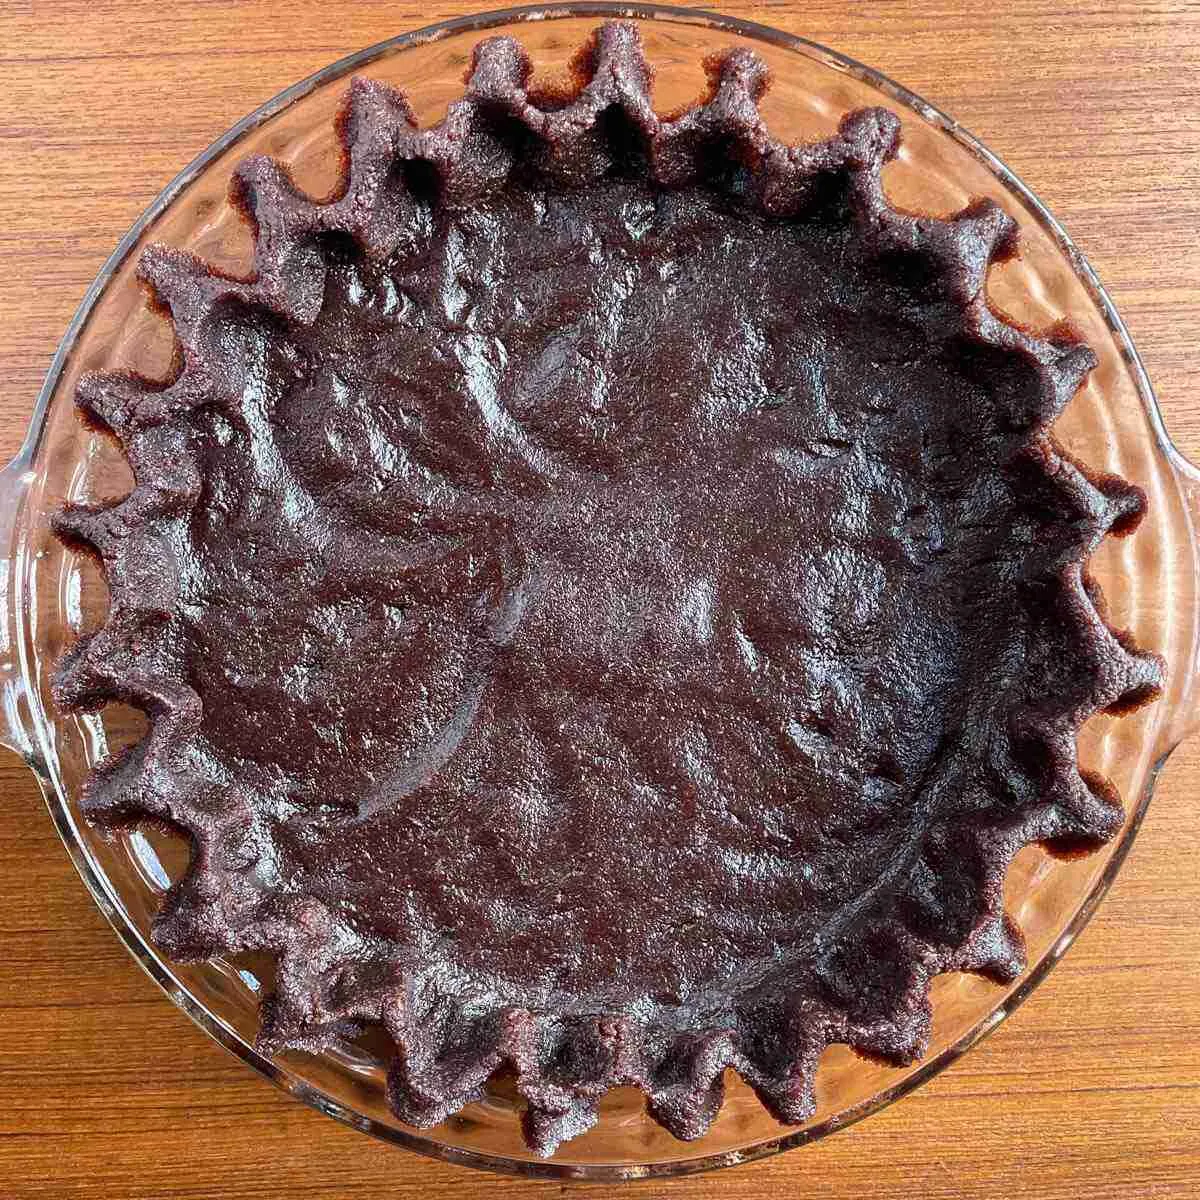 A sugar-free, gluten-free, keto chocolate pie crust made with almond flour.